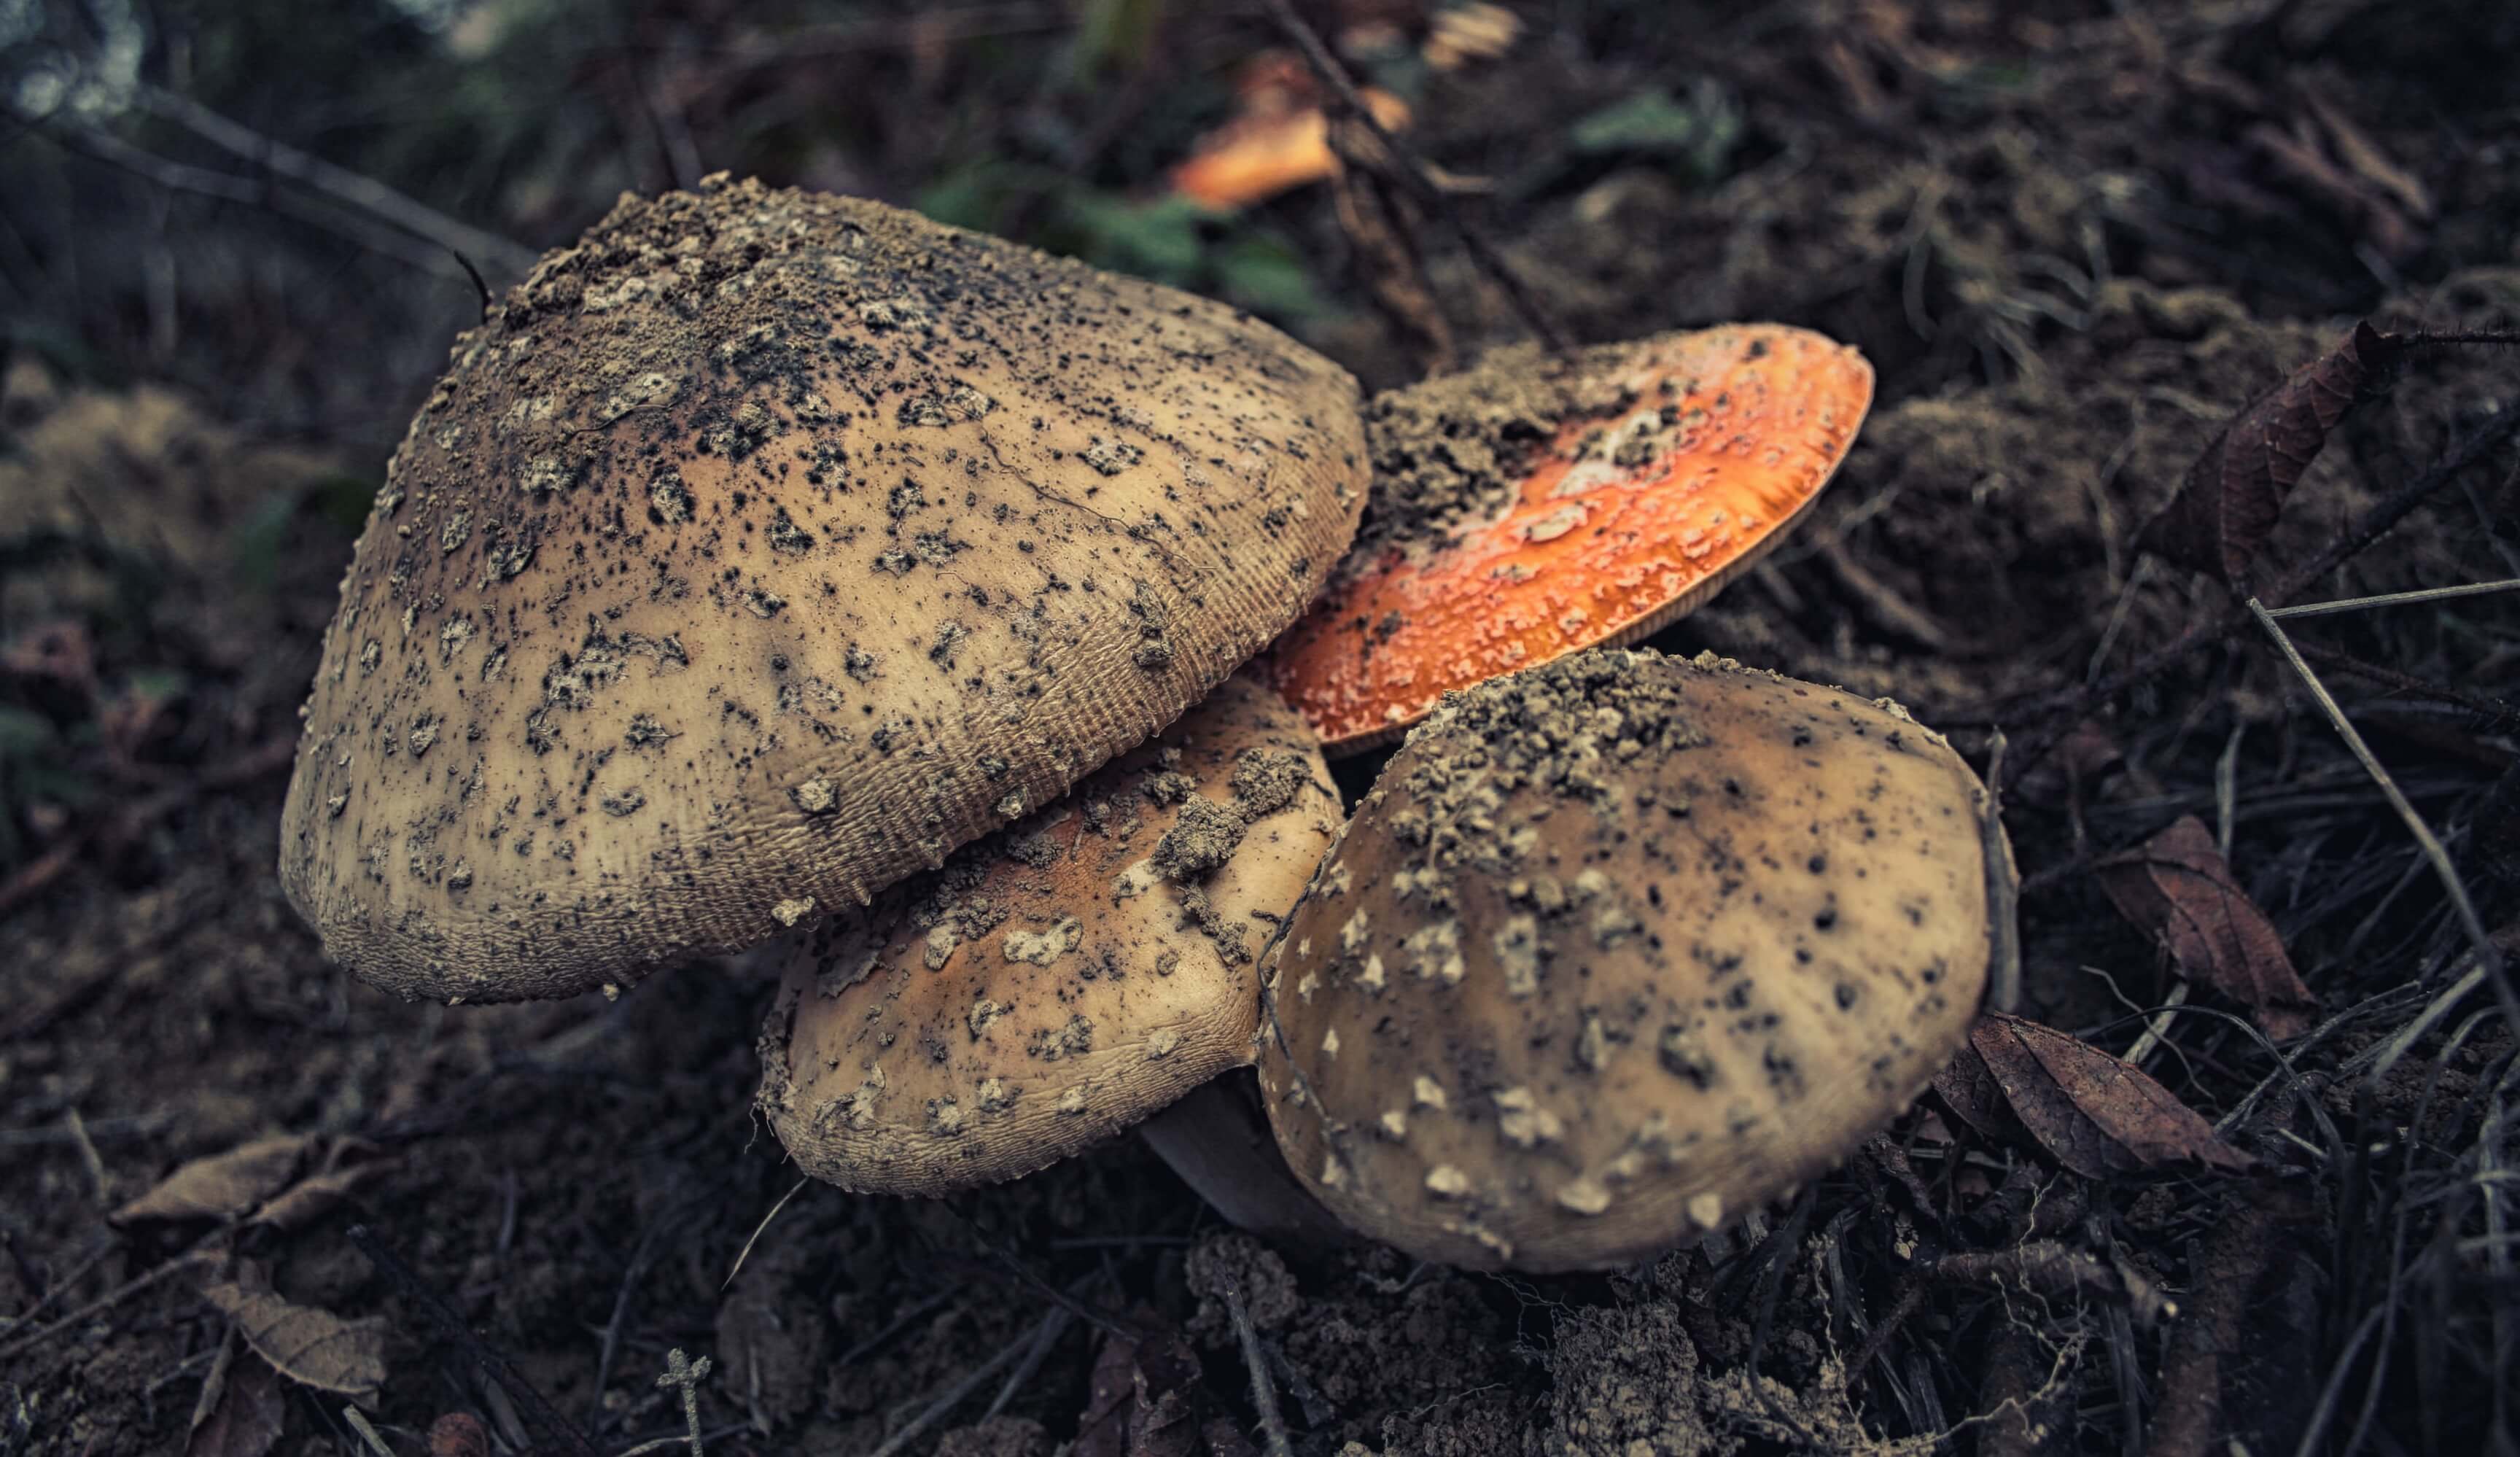 Mushrooms in the forest, bundled up together.